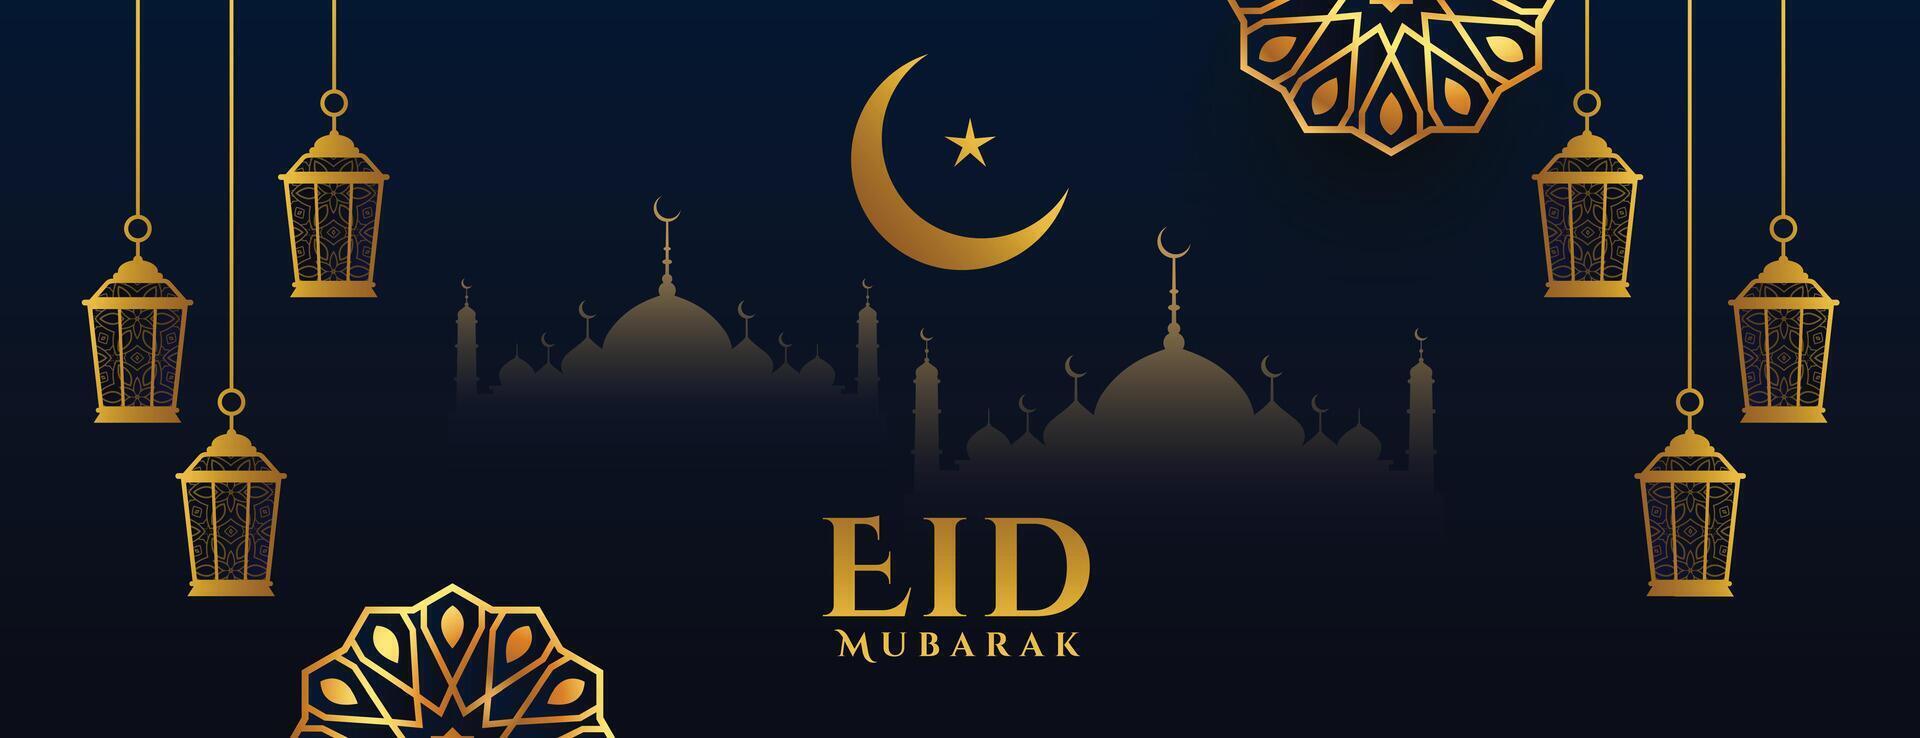 beautiful eid mubarak holiday banner with islamic decoration vector